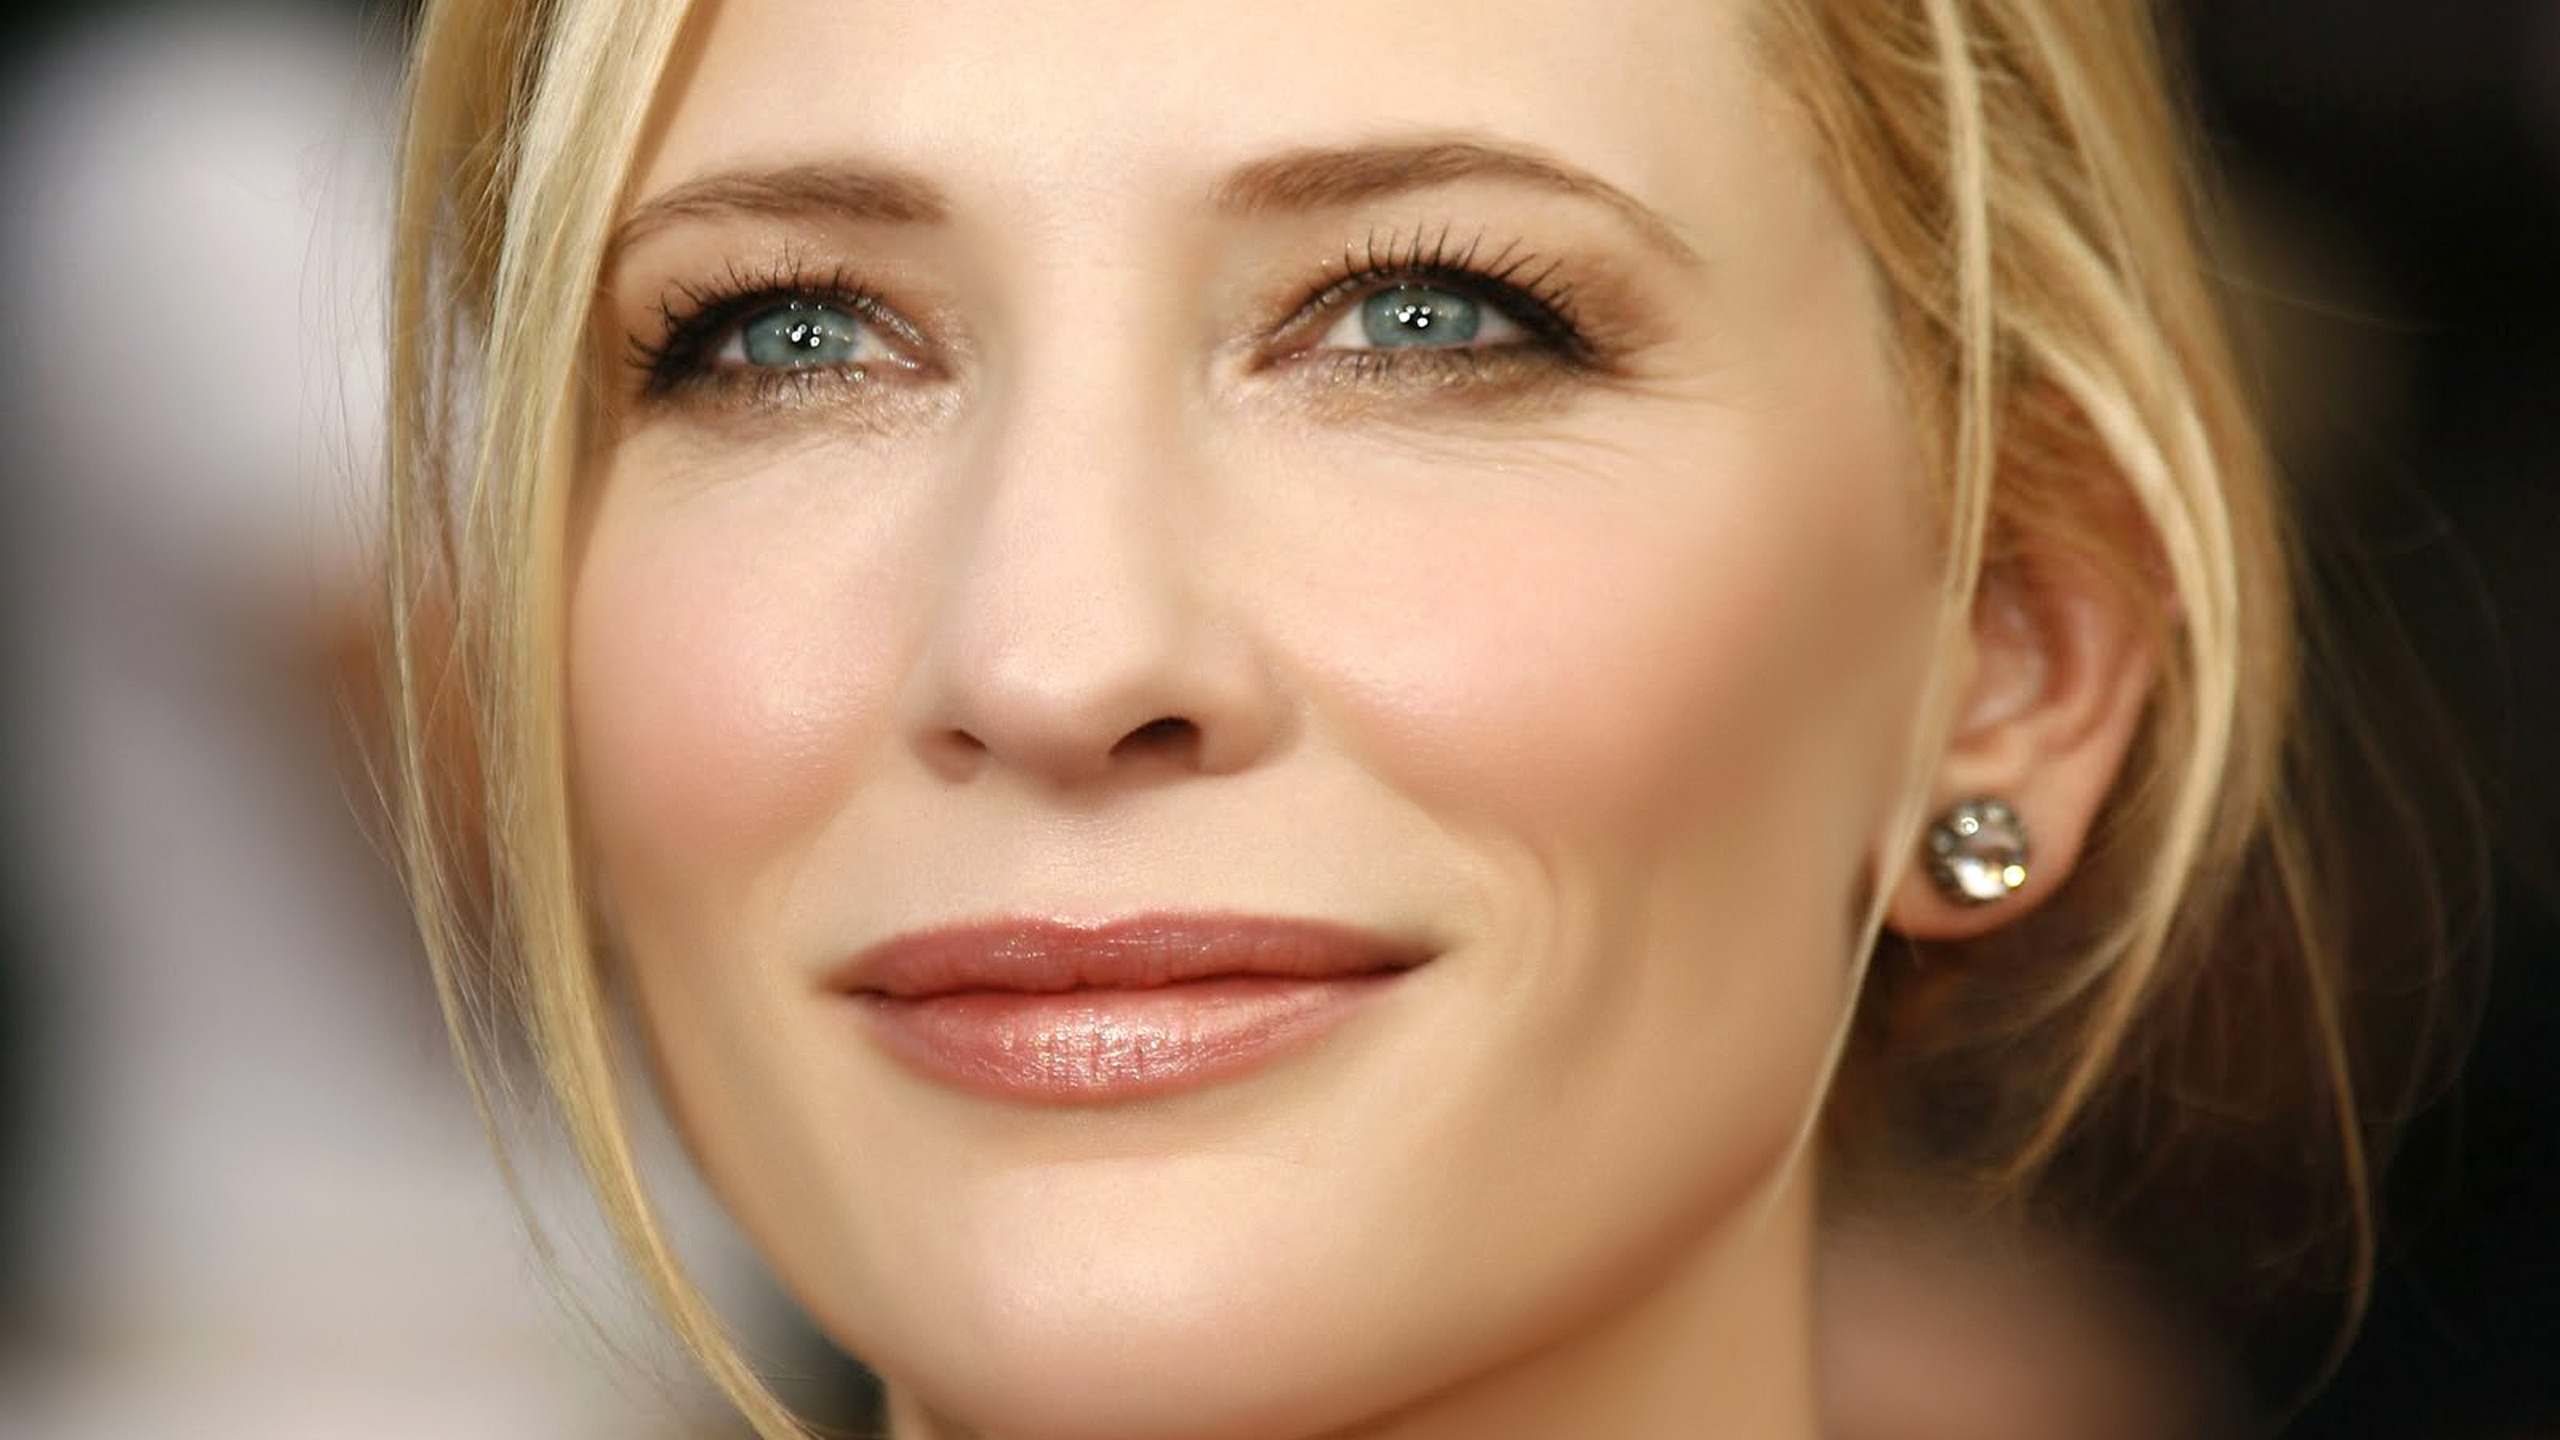 Cate Blanchett Look for 2560x1440 HDTV resolution